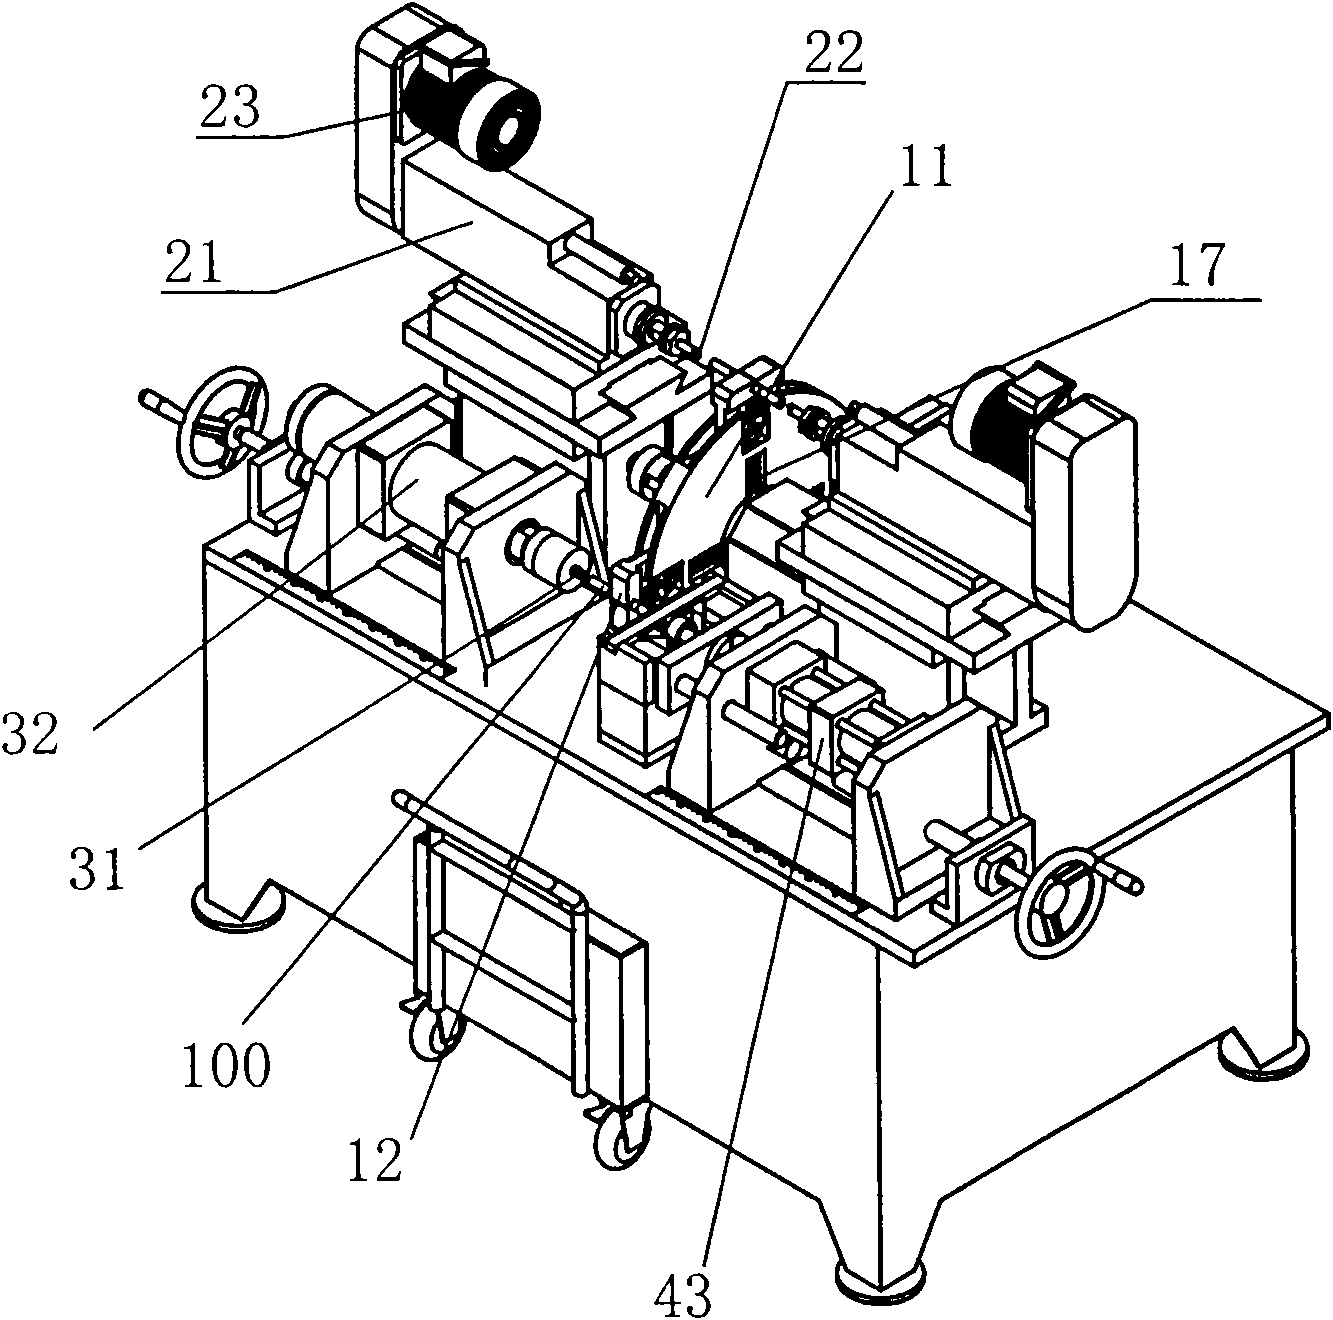 Automatic pipe machining machine